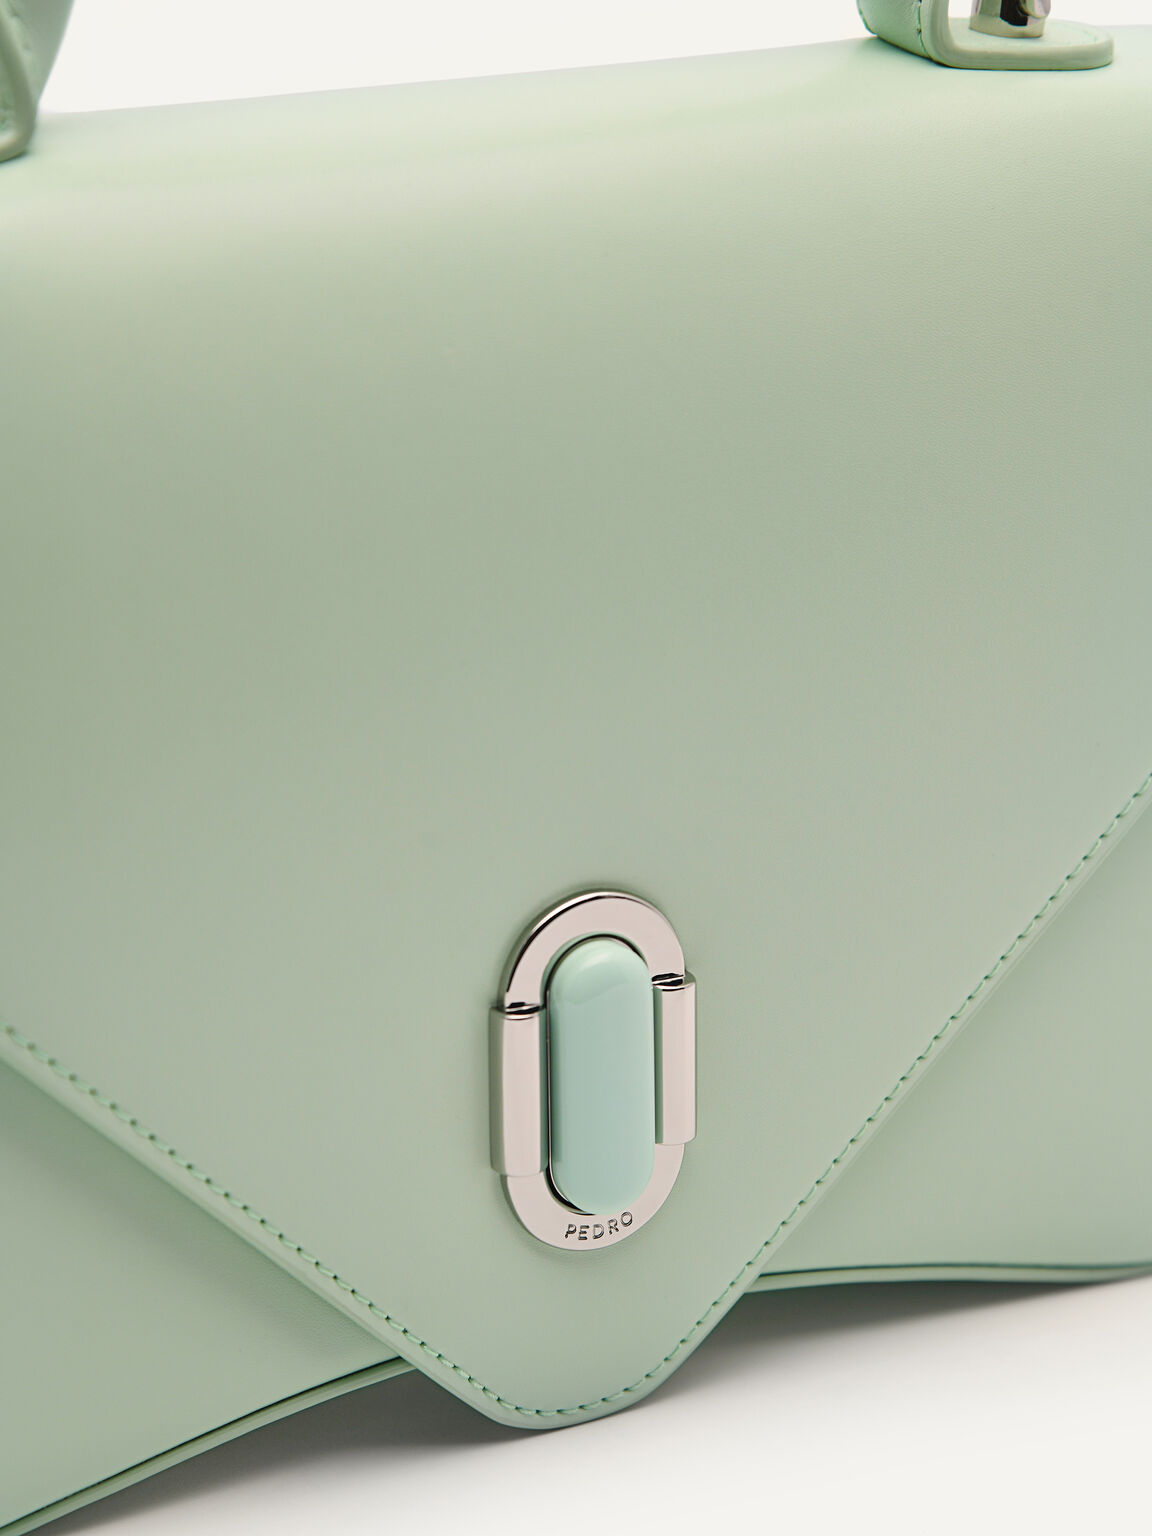 Zenith Leather Handbag, Light Green